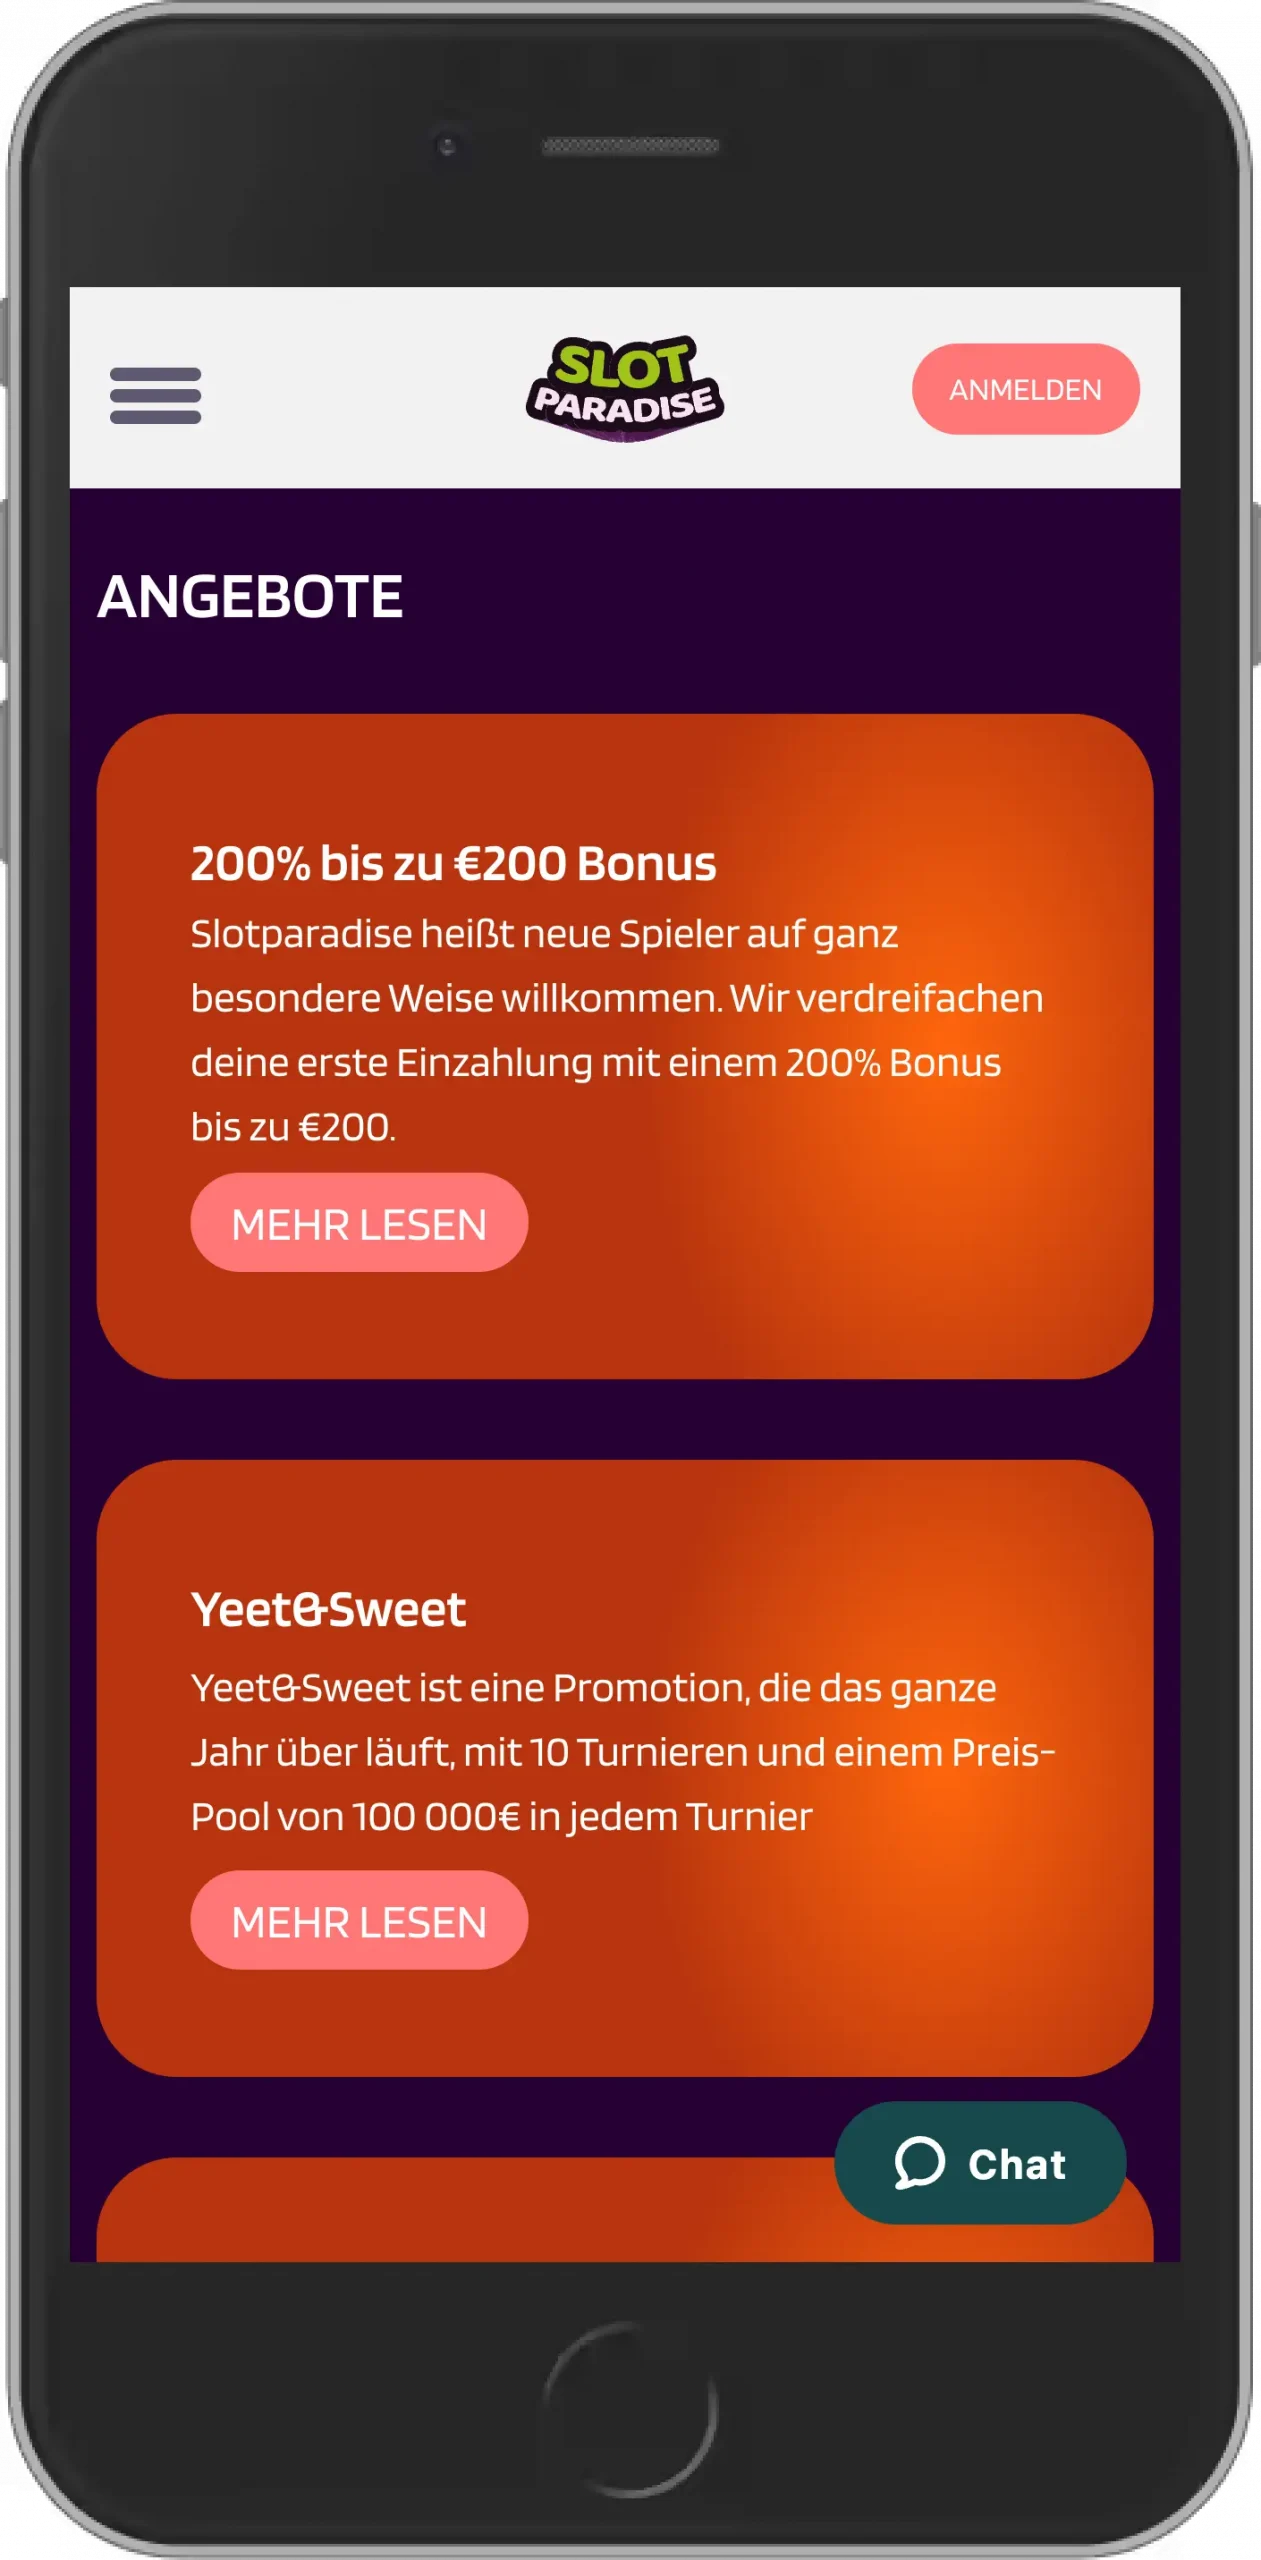 Slotparadise Bonus Angebote Übersicht - Mobile Ansicht